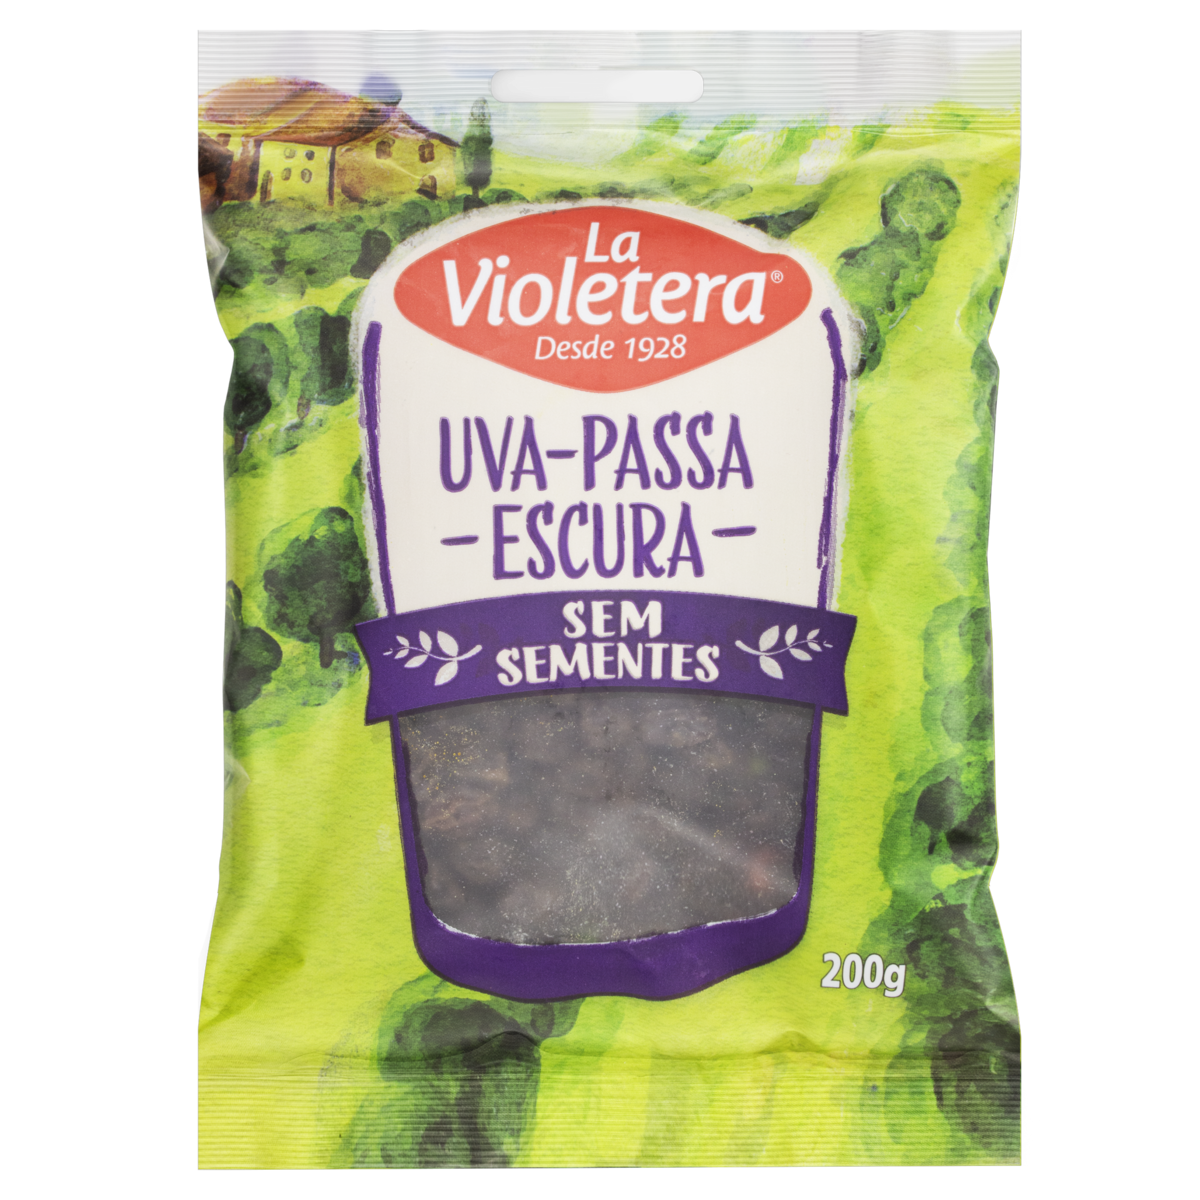 Uva Passa Escura Sem Semente La Violetera Pacote 100g Gtin Ean Upc 7891089062767 Product